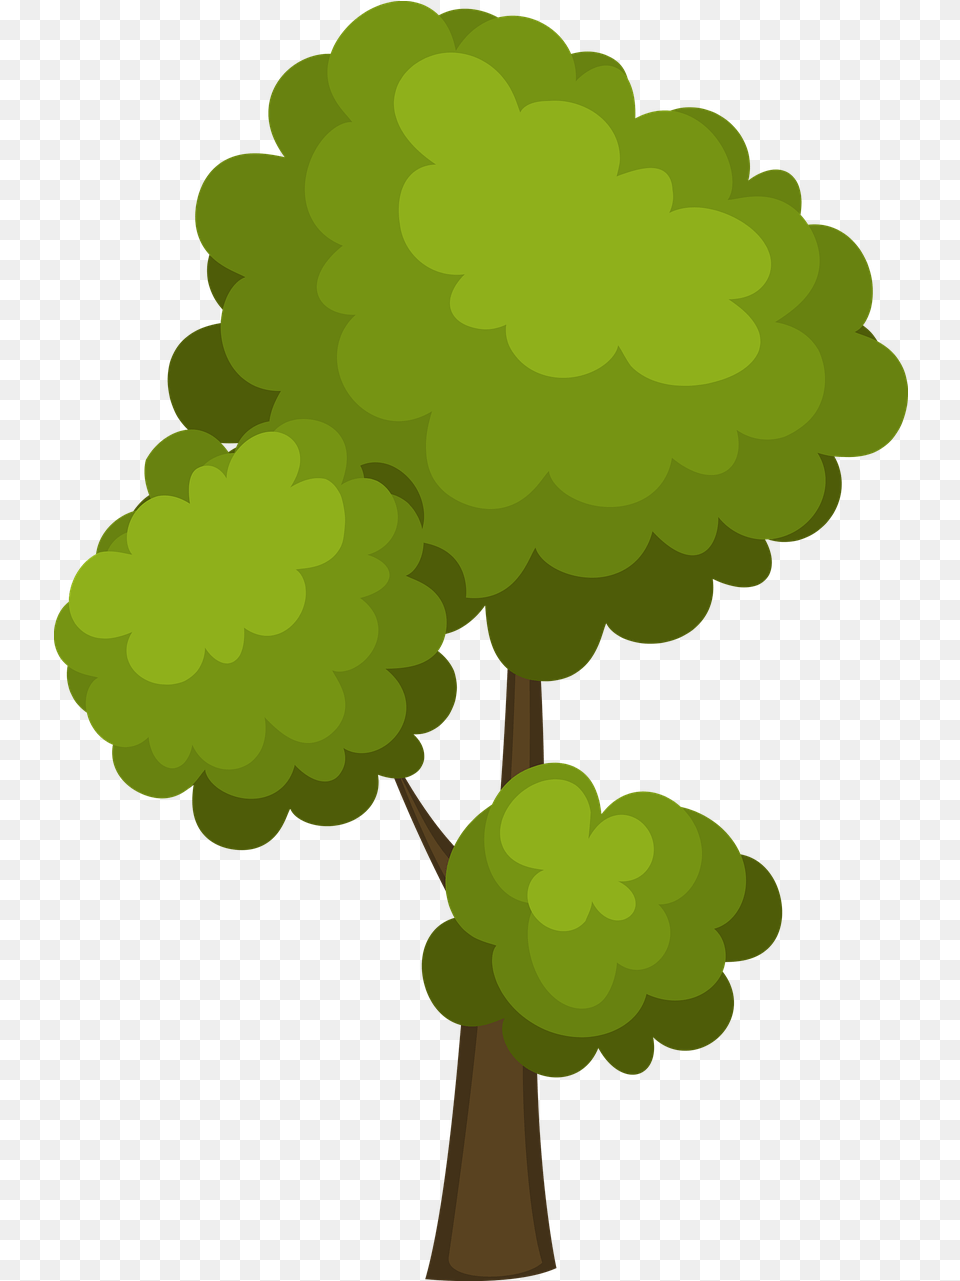 Tree Cartoon Icon Free Image On Pixabay Tree Icon, Green, Plant, Sycamore, Oak Png